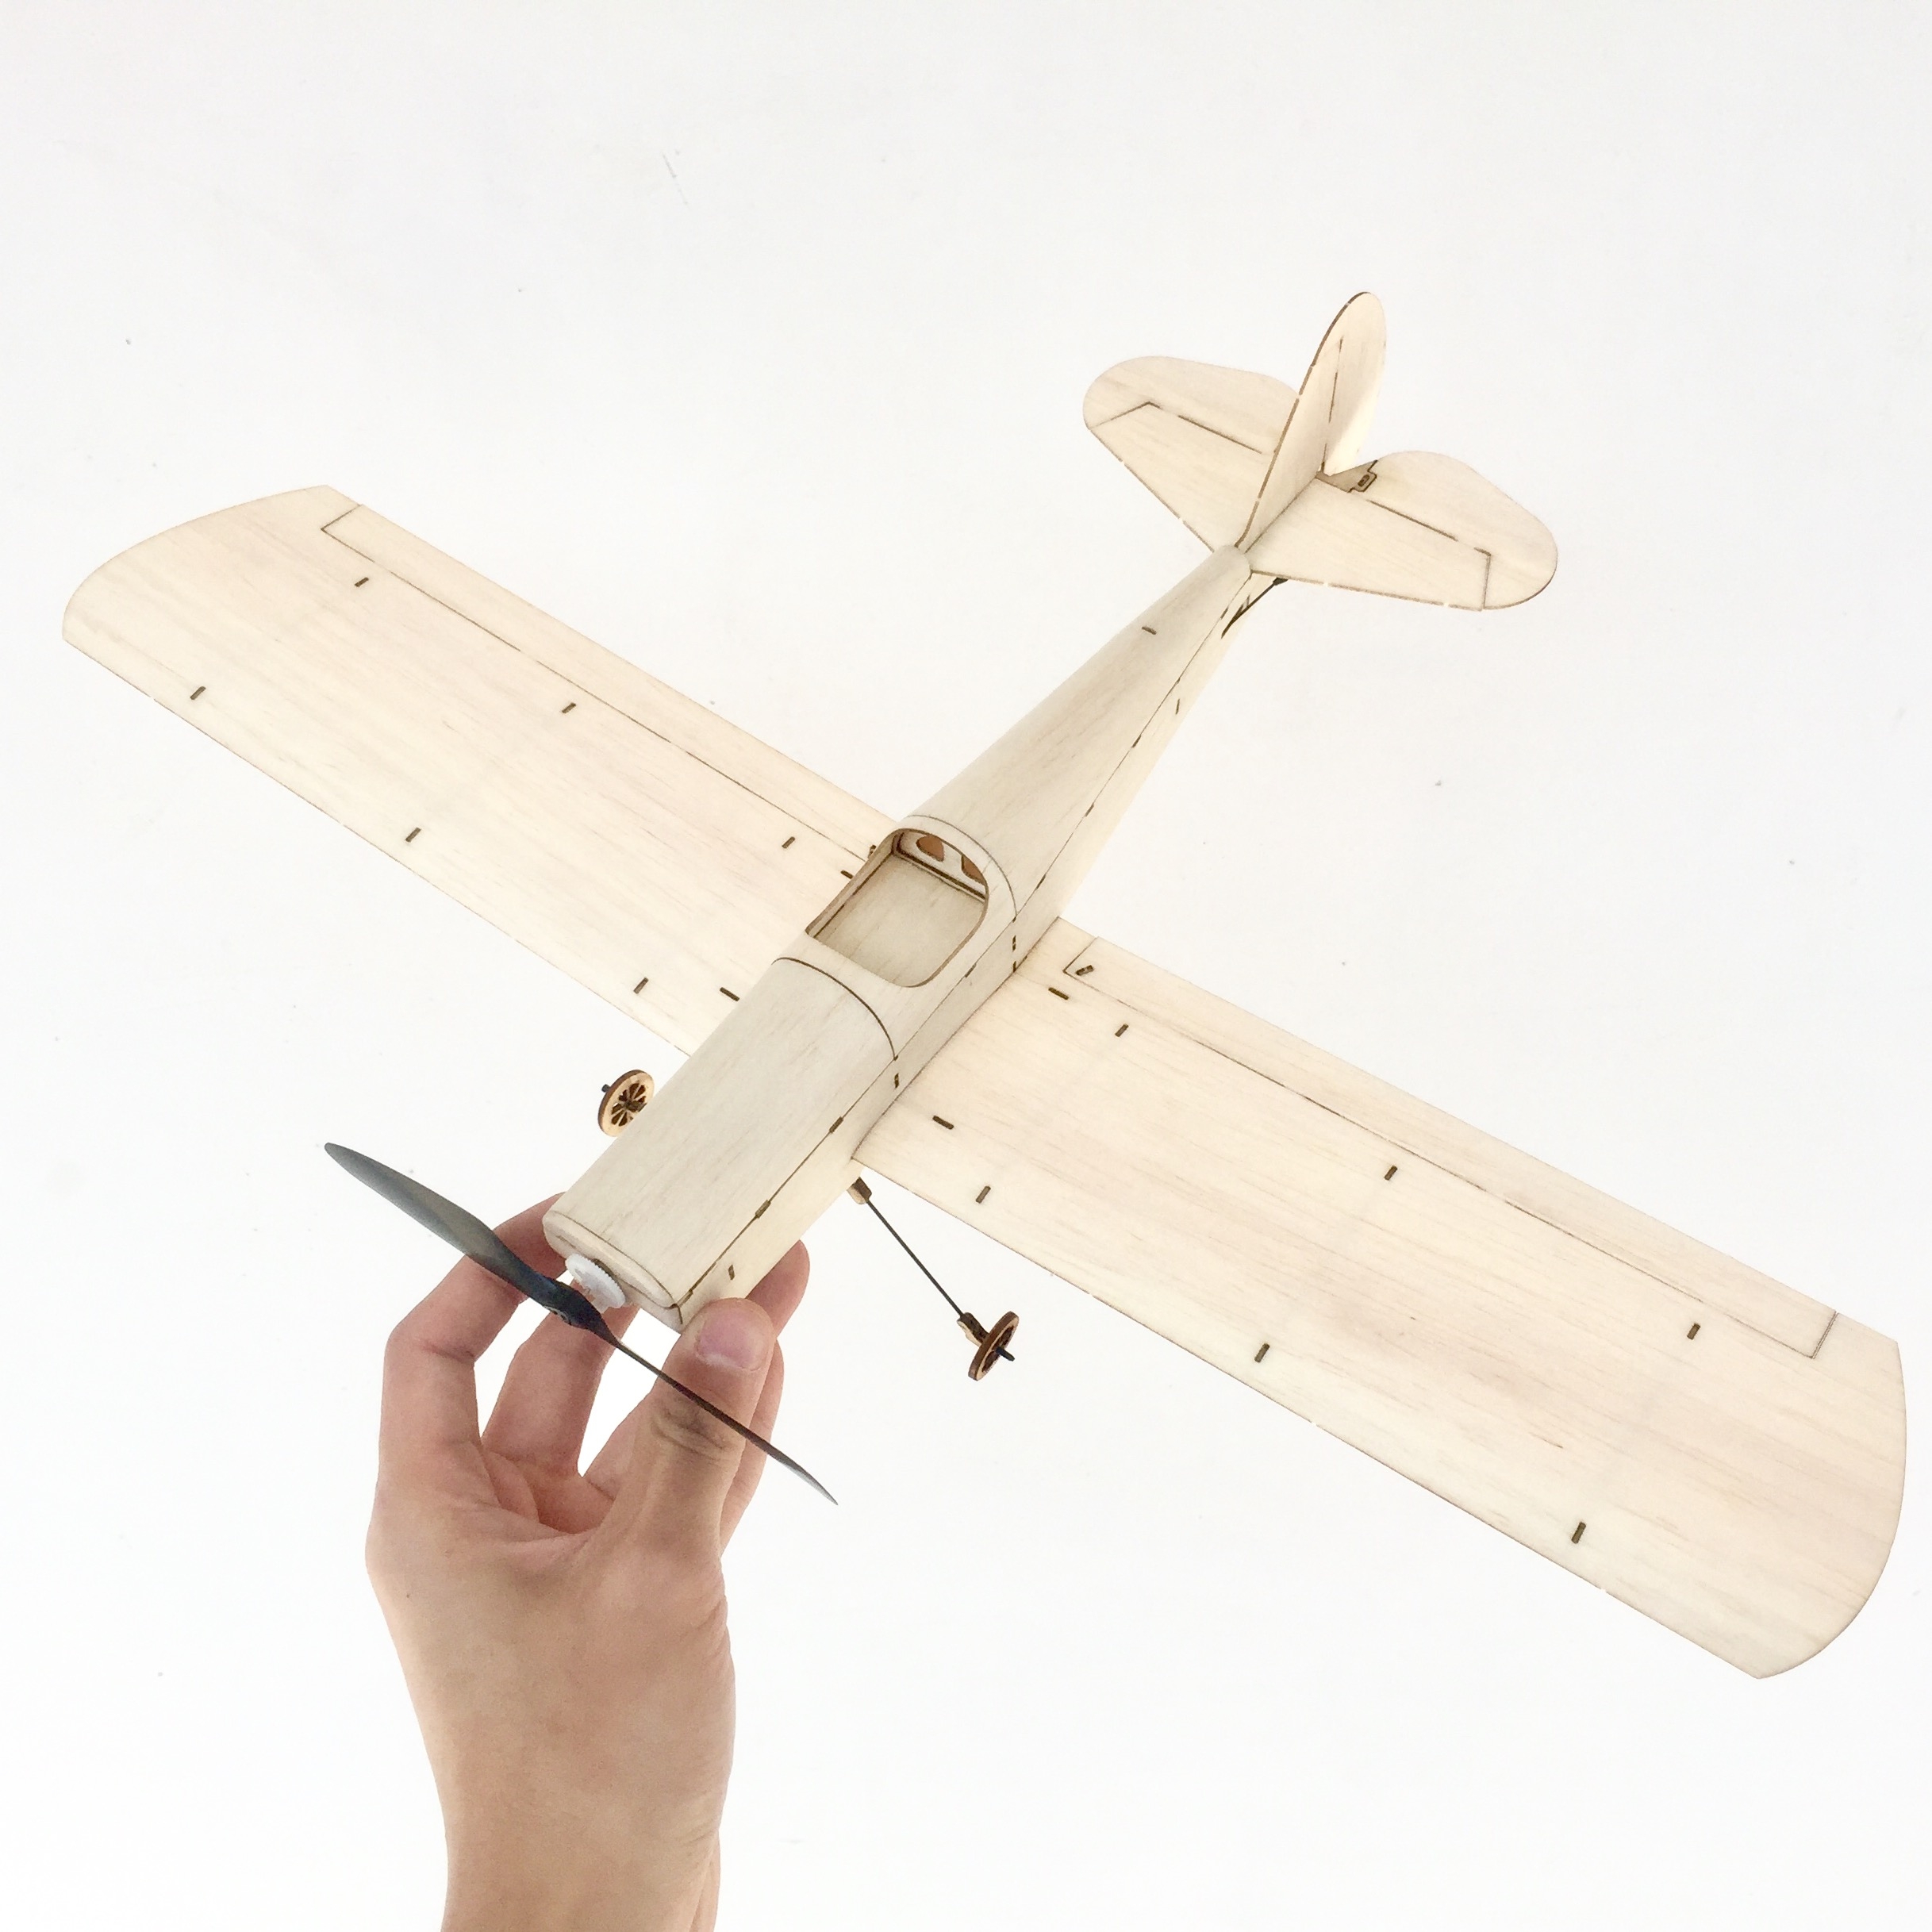 MinimumRC Spacewalker 460mm Wingspan Balsa Wood Laser Cut RC Airplane KIT